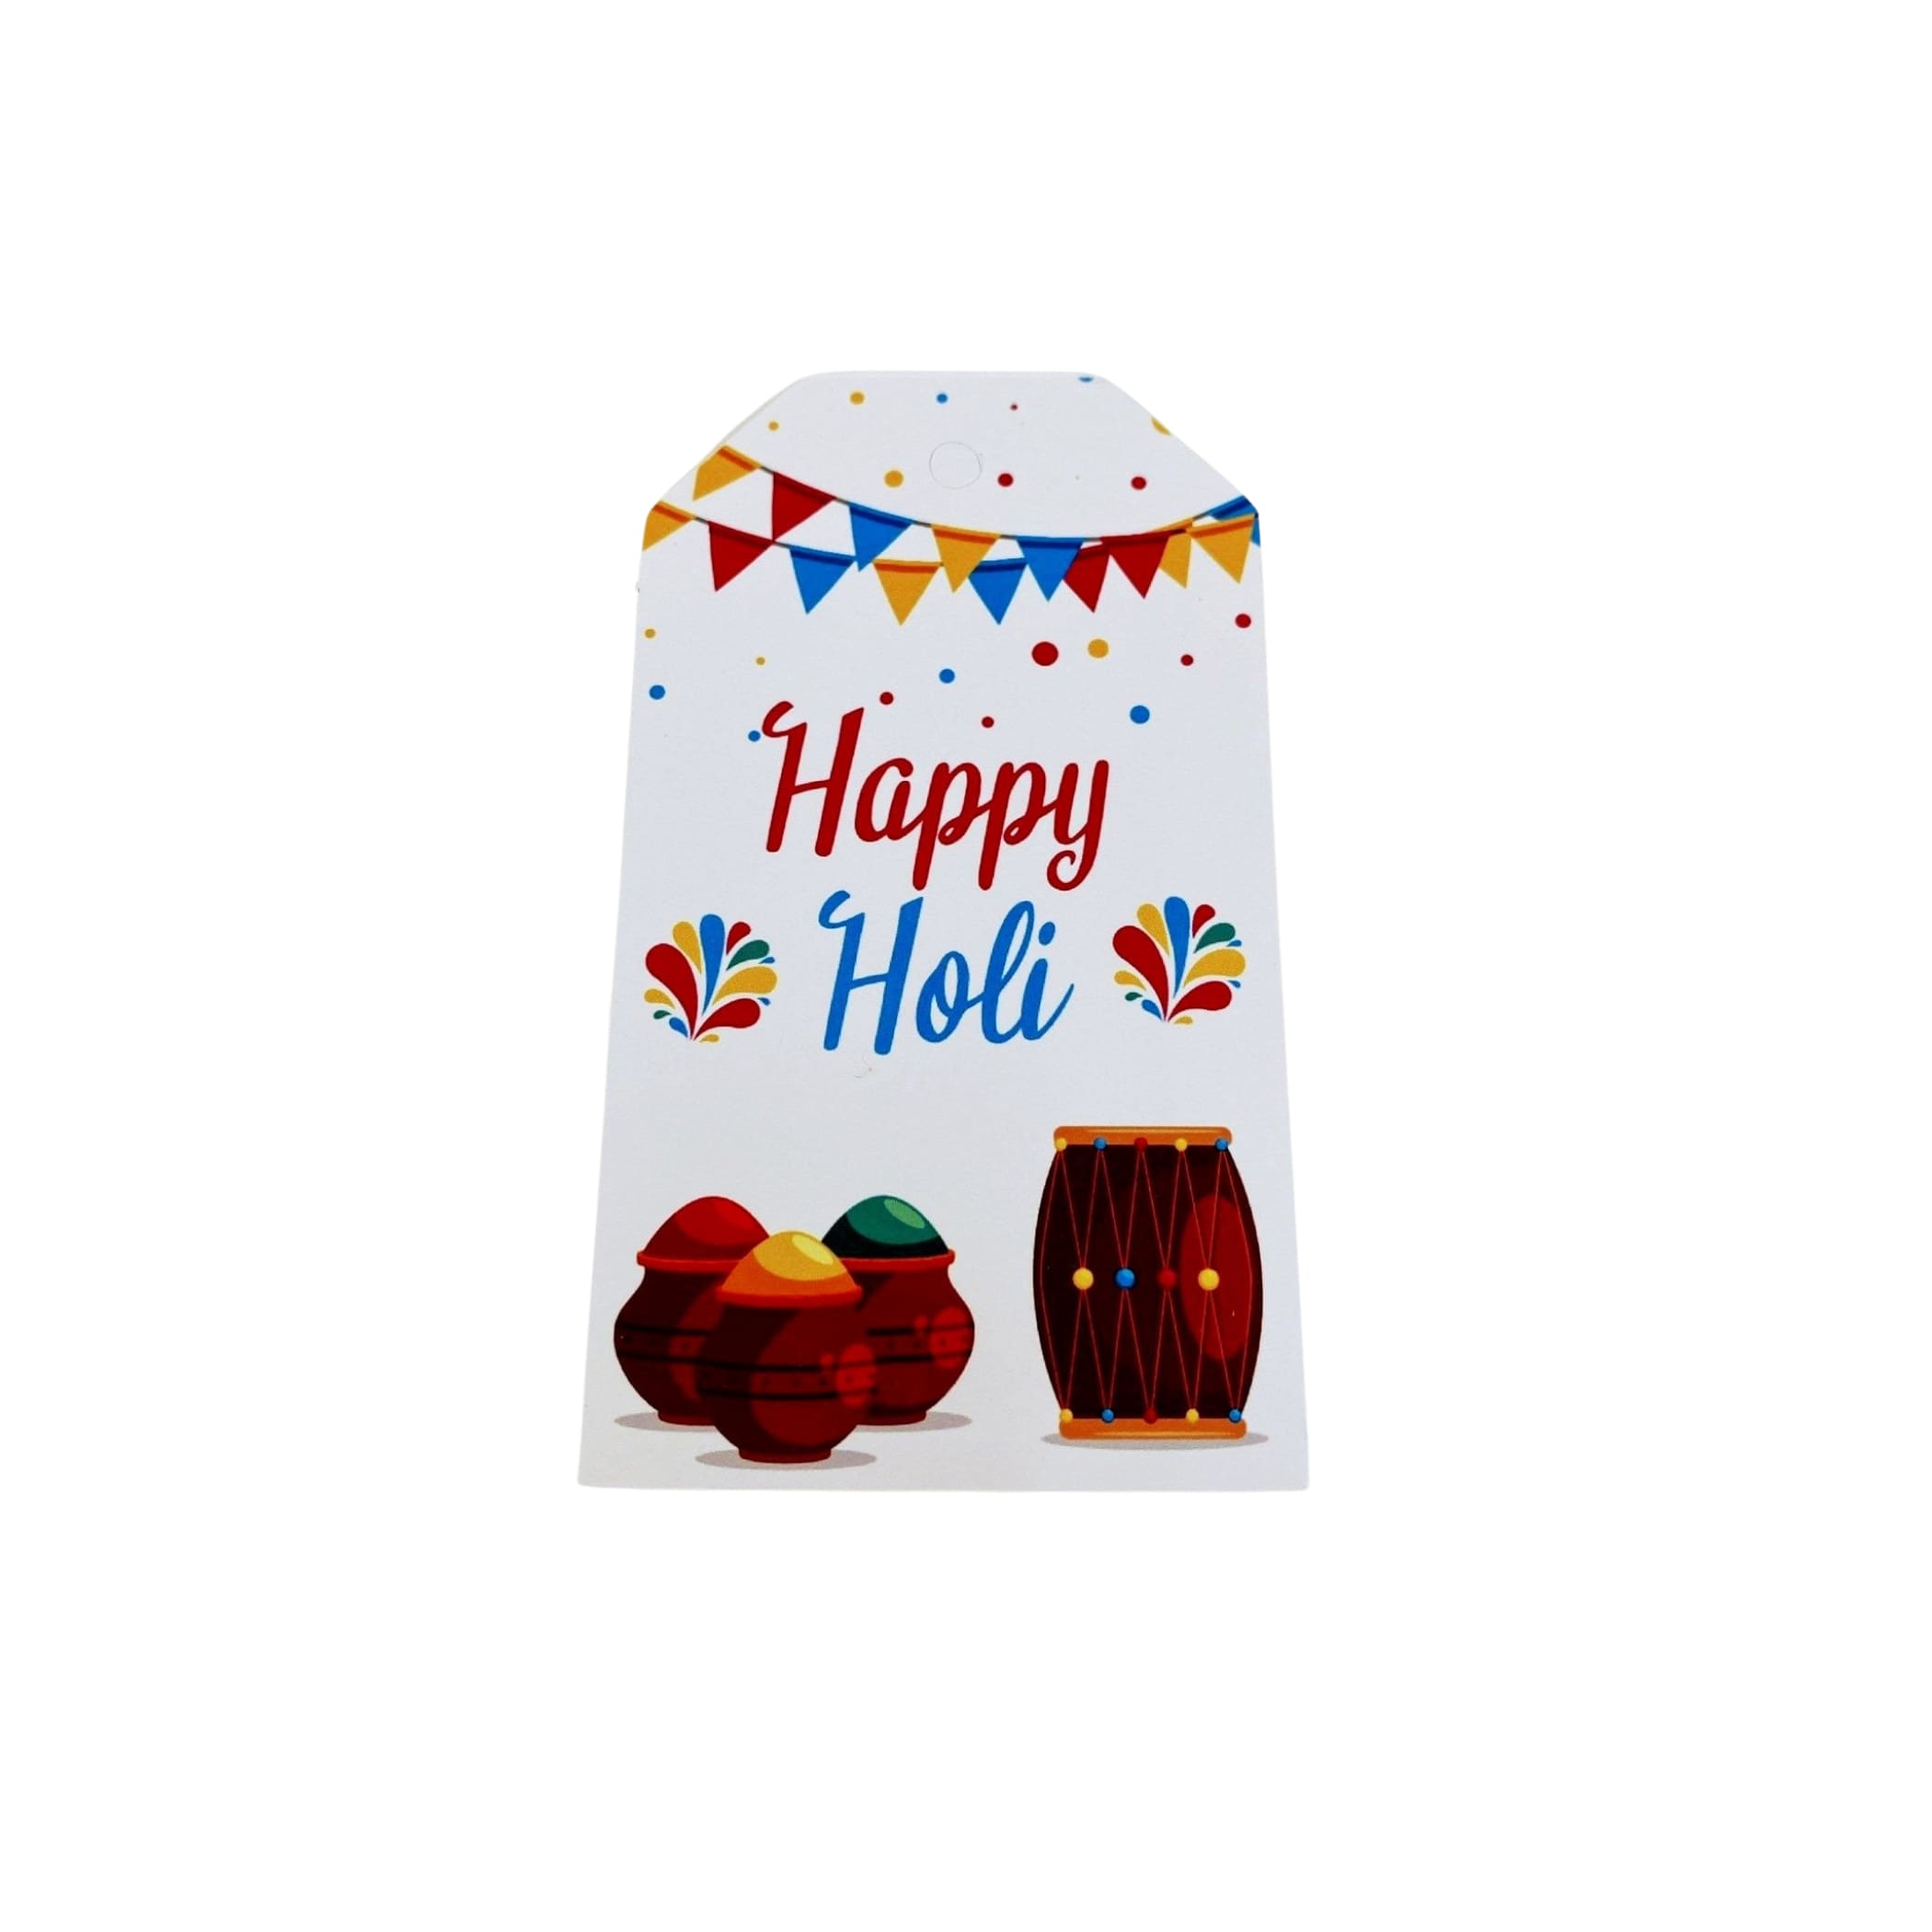 Set of 10 happy holi tags gift - design 1 - gifttag-holi